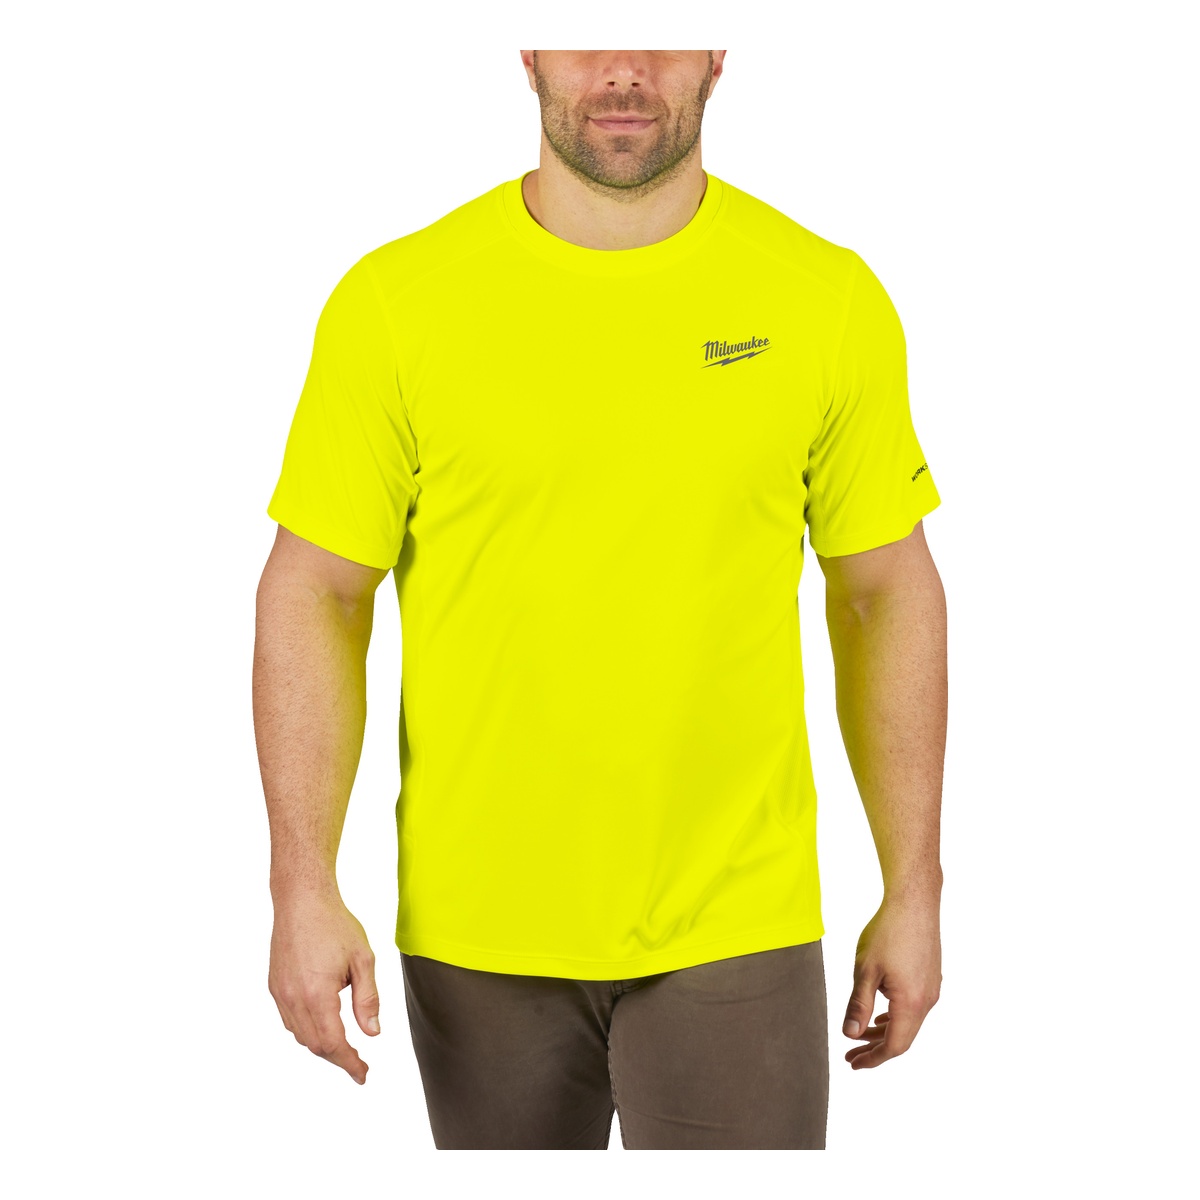 Milwaukee Funktions-T-Shirt gelb mit UV-Schutz WWSSYL-L - 1 Stk.